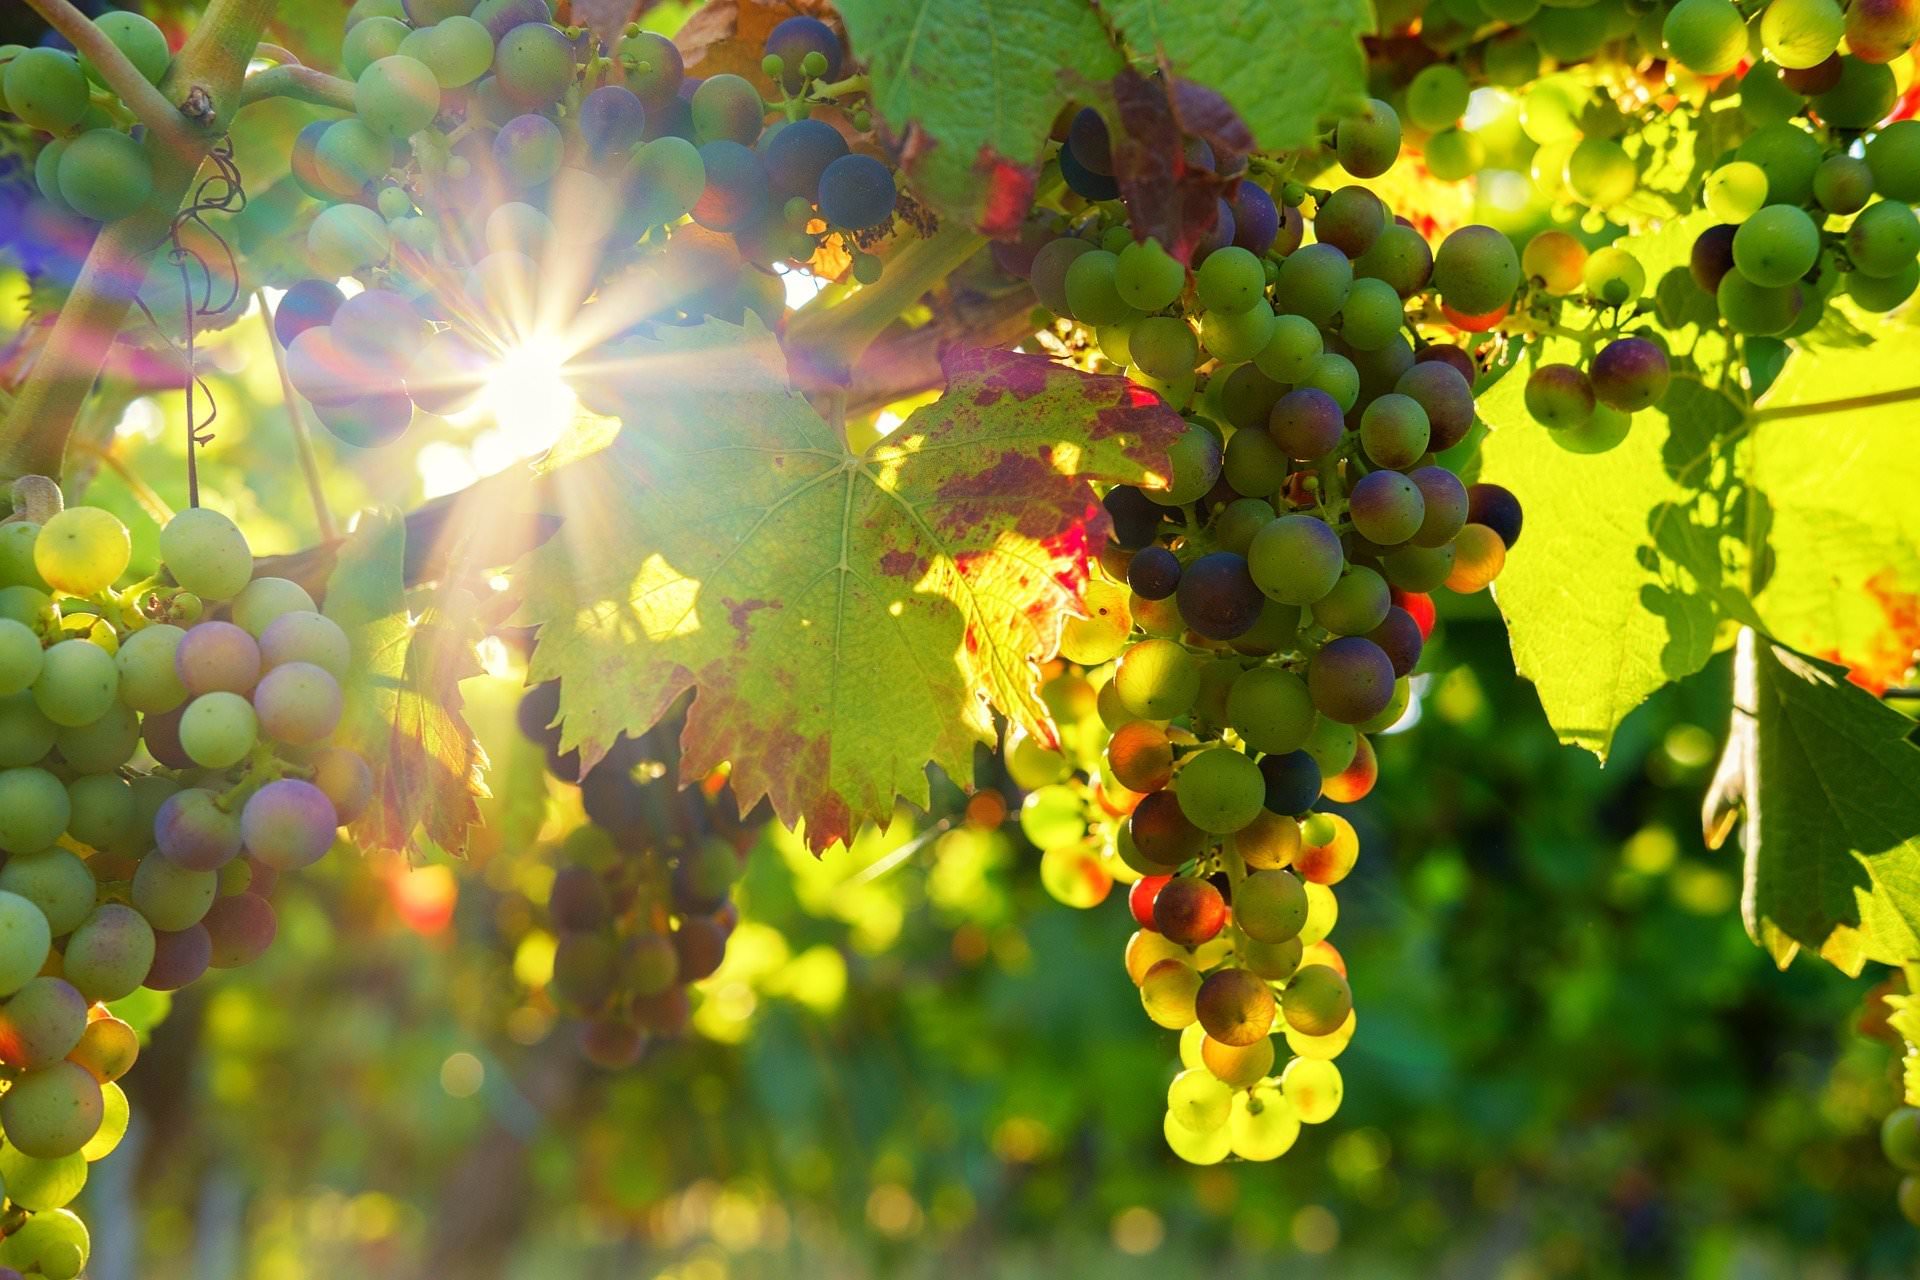 Grapes on a vine